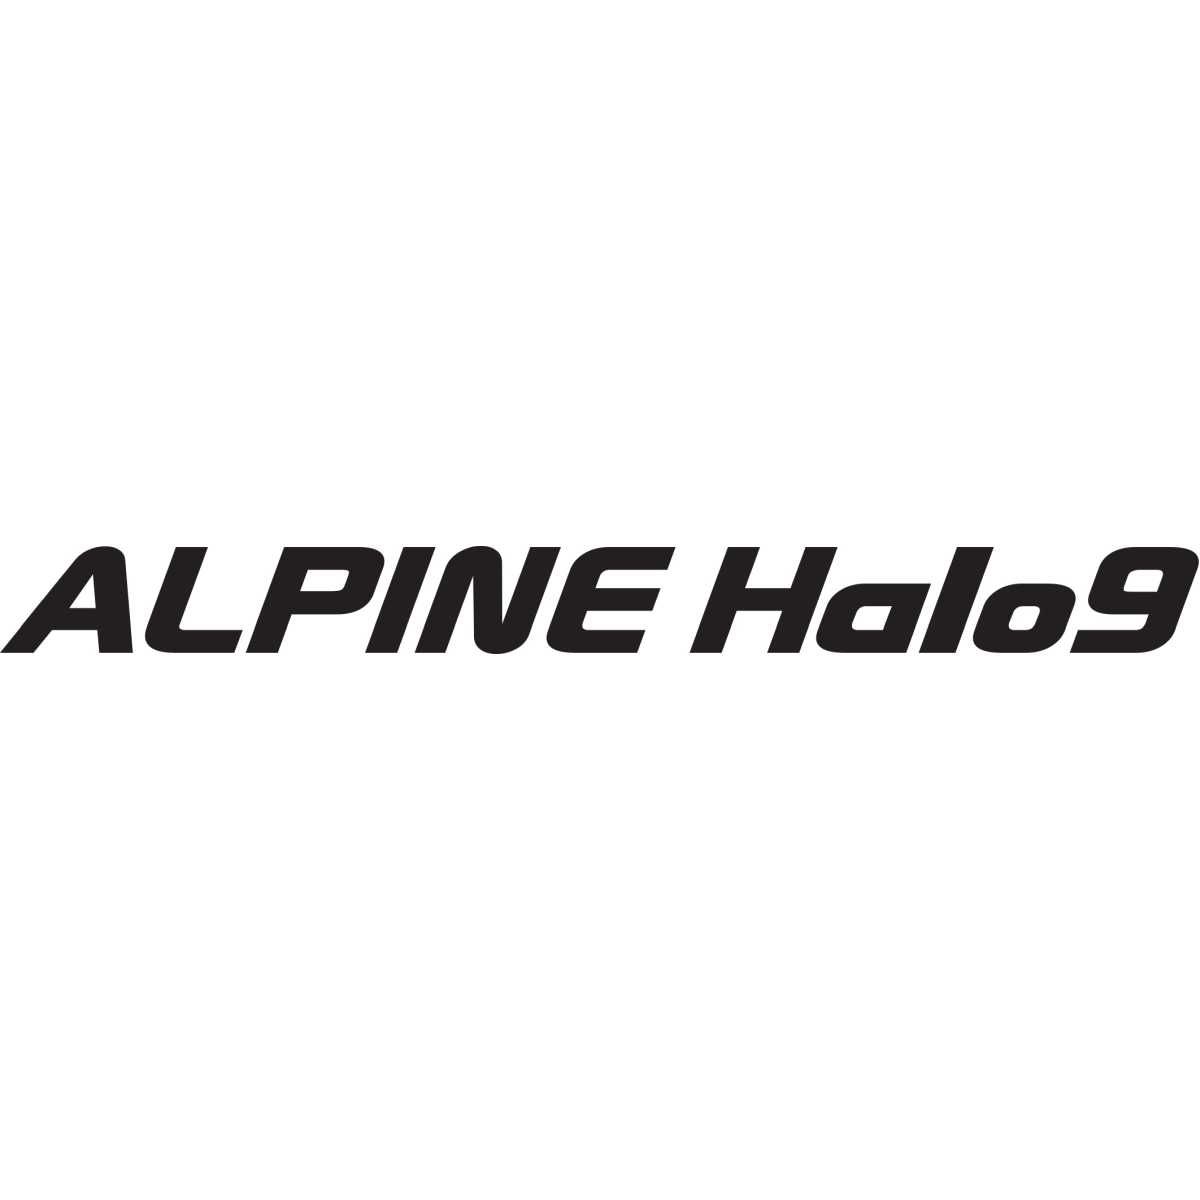 ALPINE HALO 9 Digital-Media-Station Fiat Ducato Serie 8 iLX-F905DU8